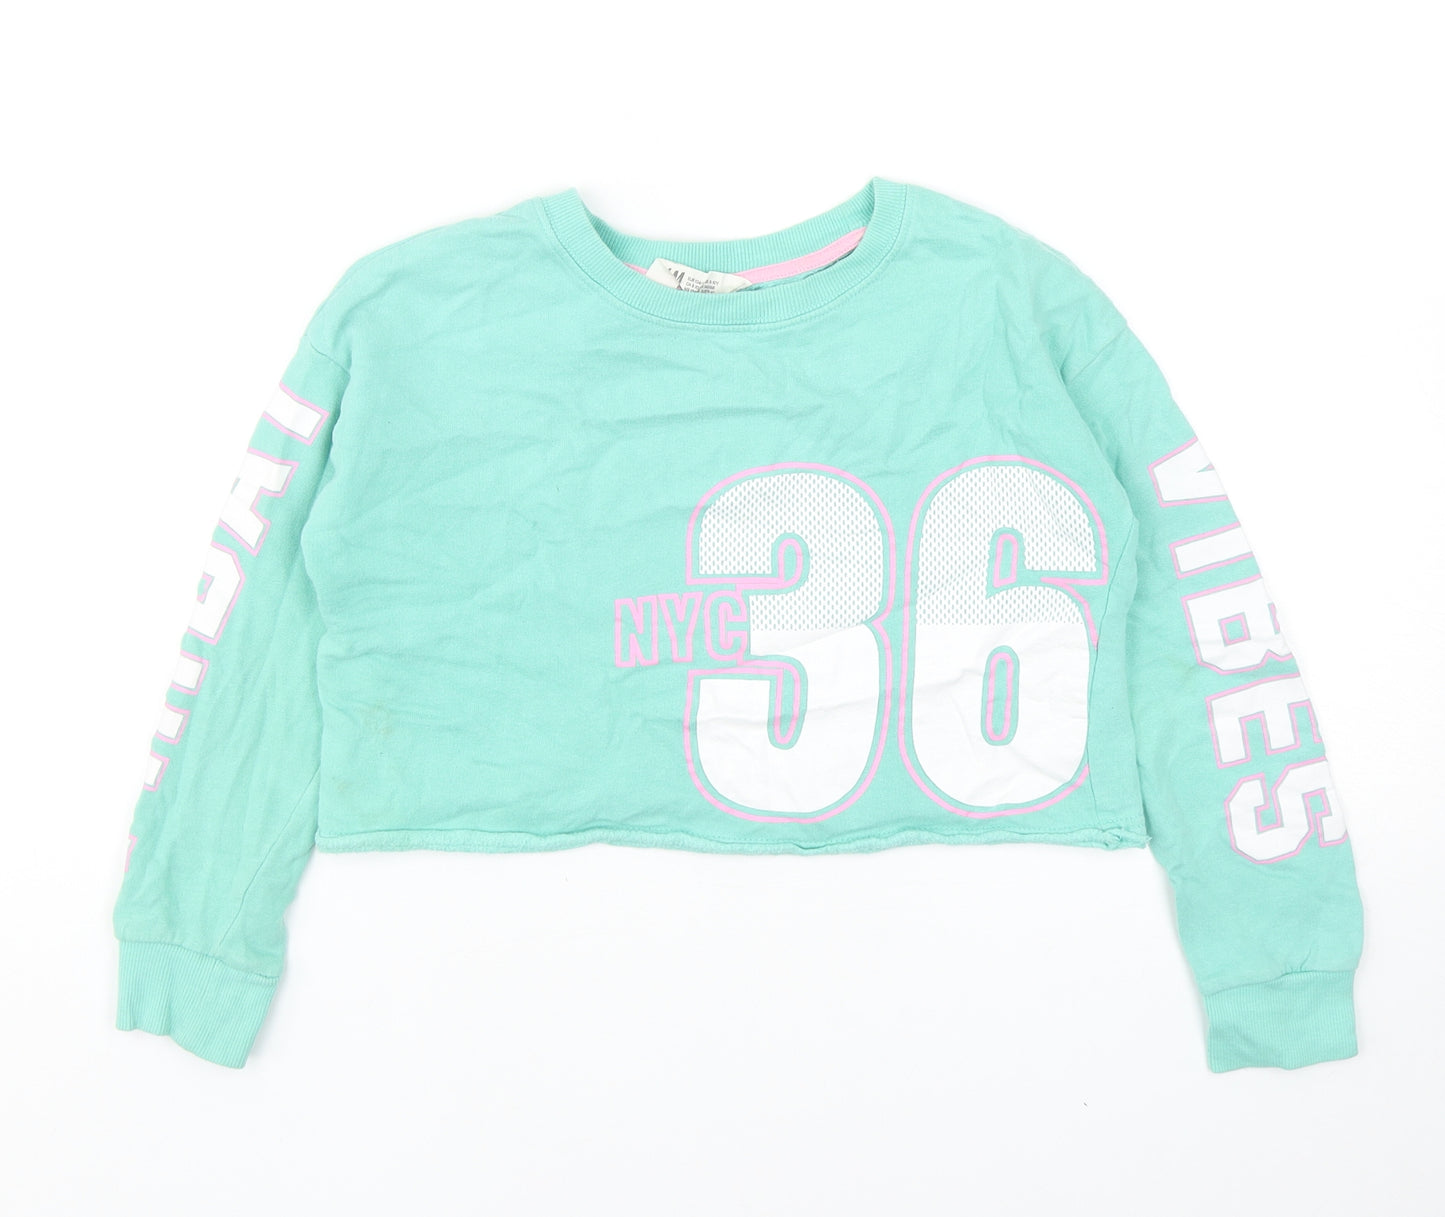 H&M Girls Green Cotton Pullover Sweatshirt Size 9-10 Years Pullover